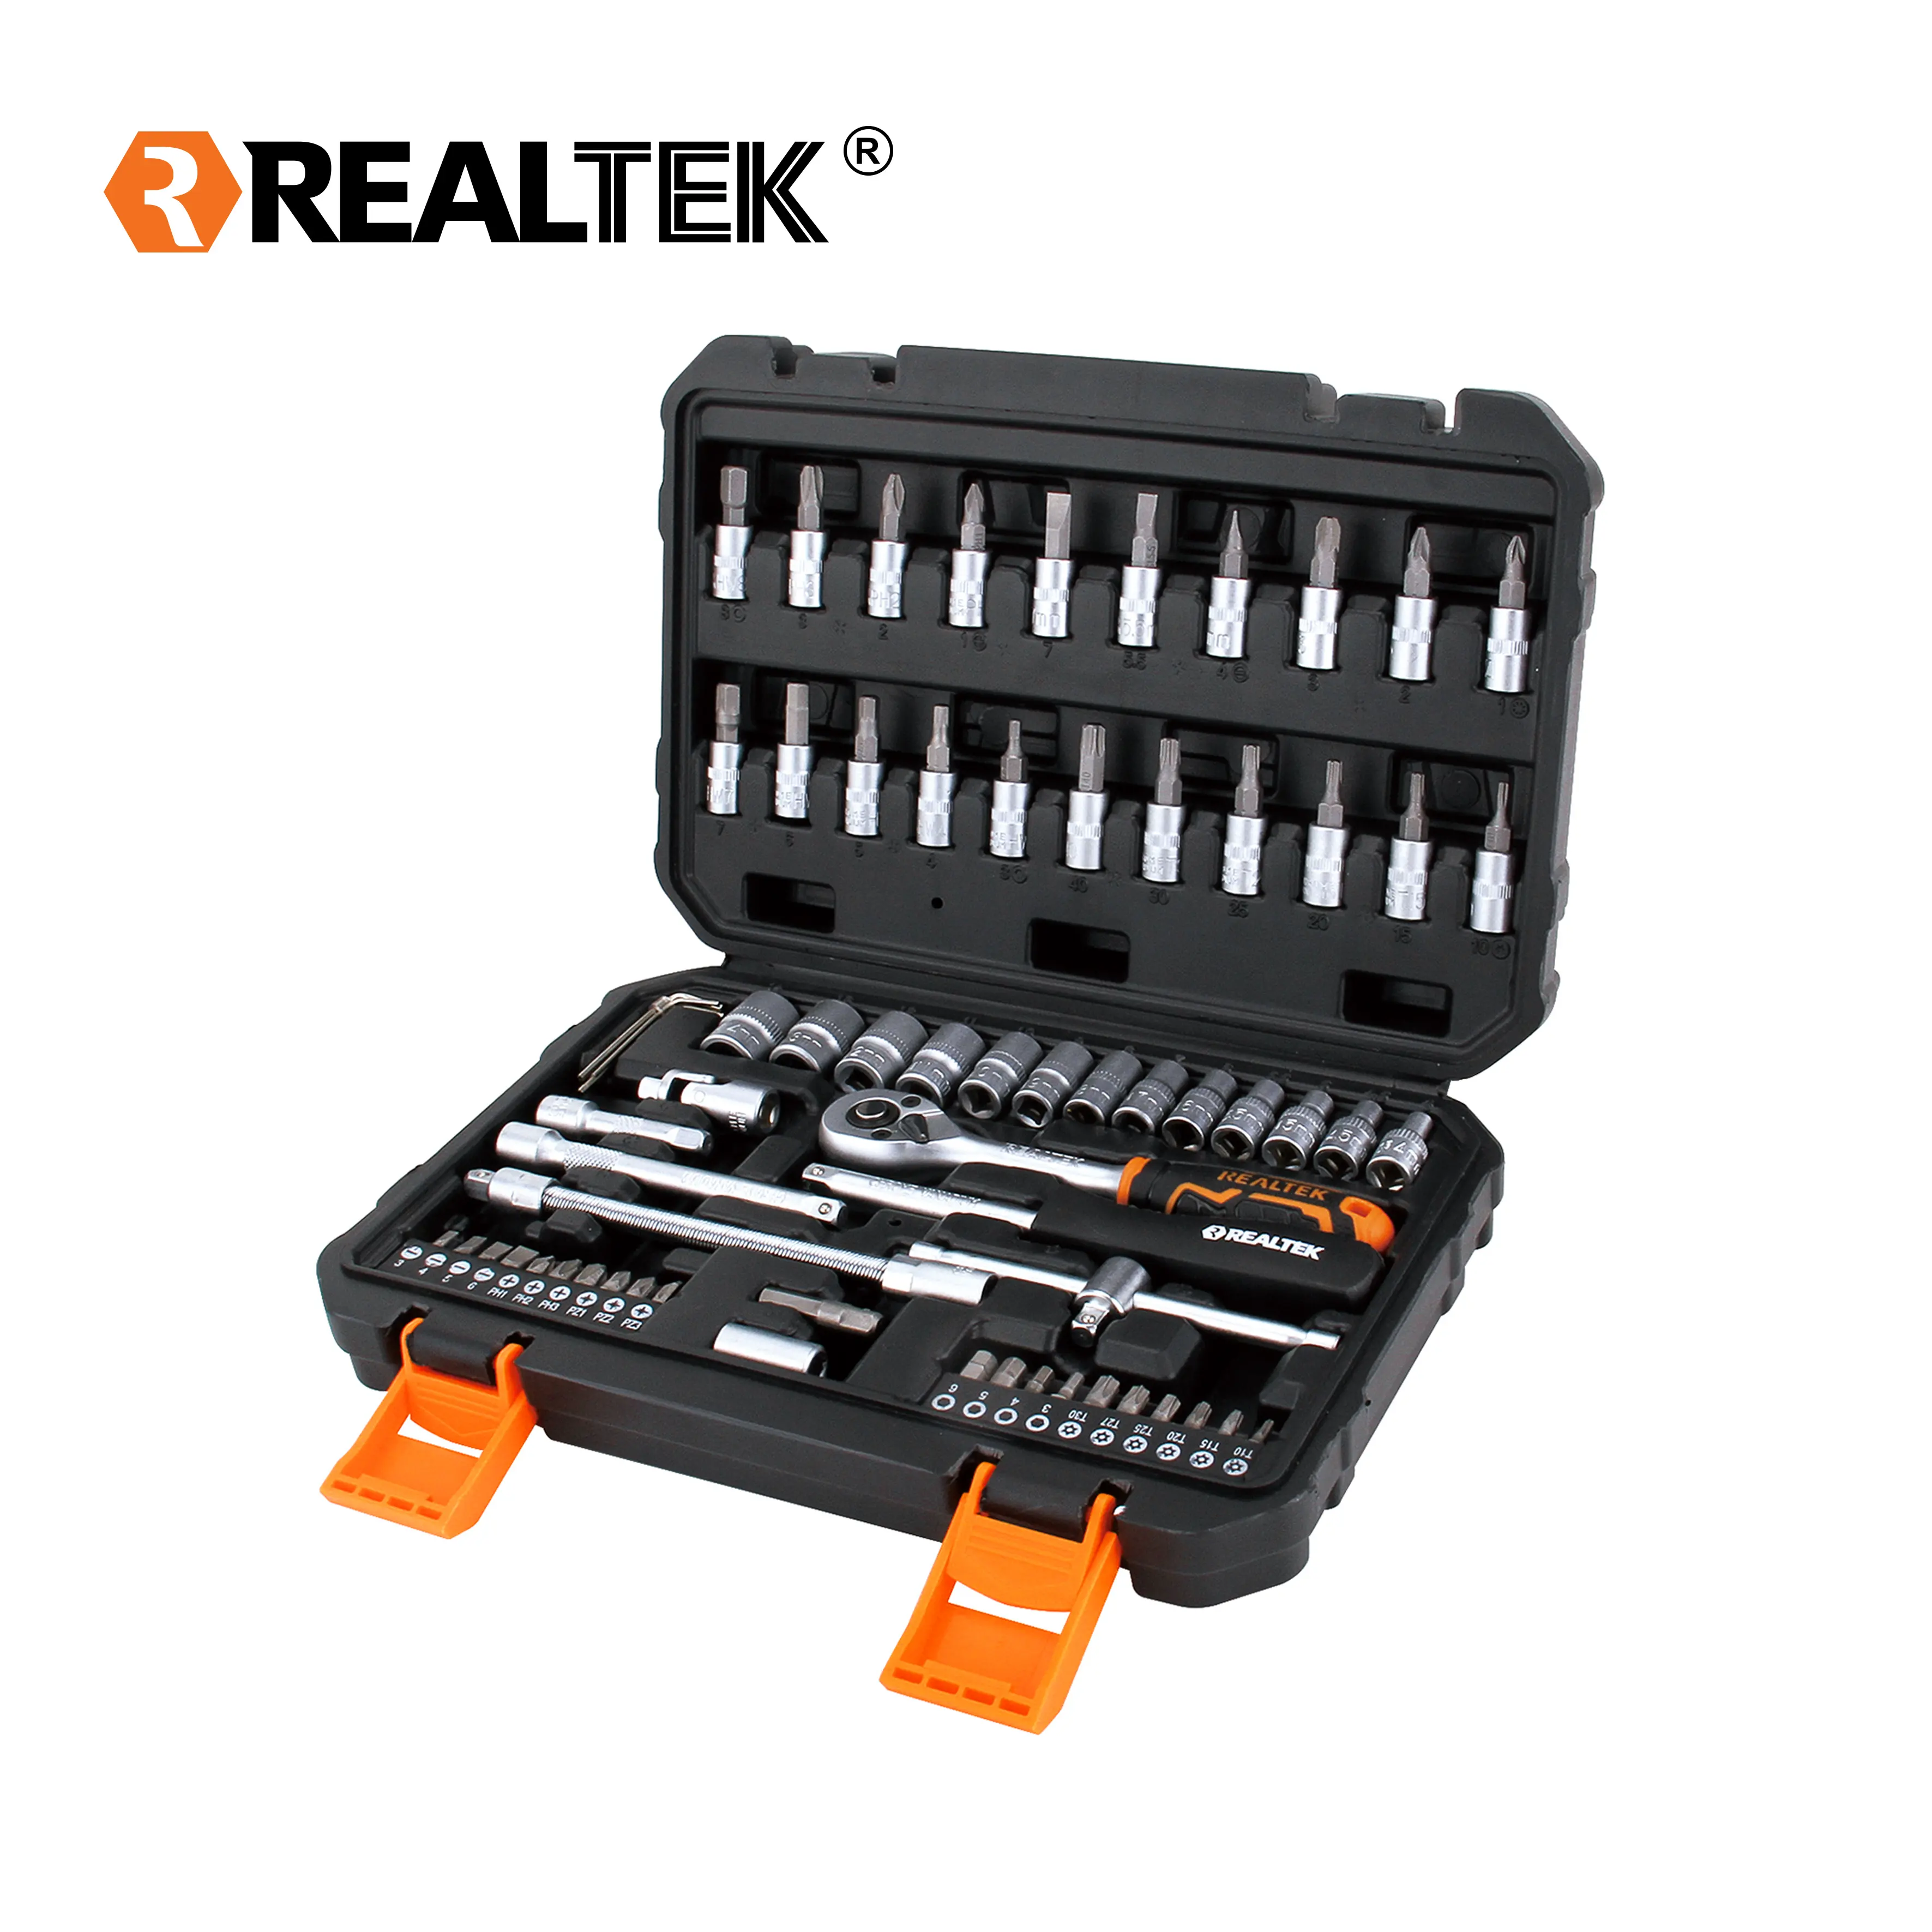 Realtek 66Pcs Professional 1/4 "CRV Socket Set Tools Kit strumento meccanico utensili manuali per la riparazione automatica